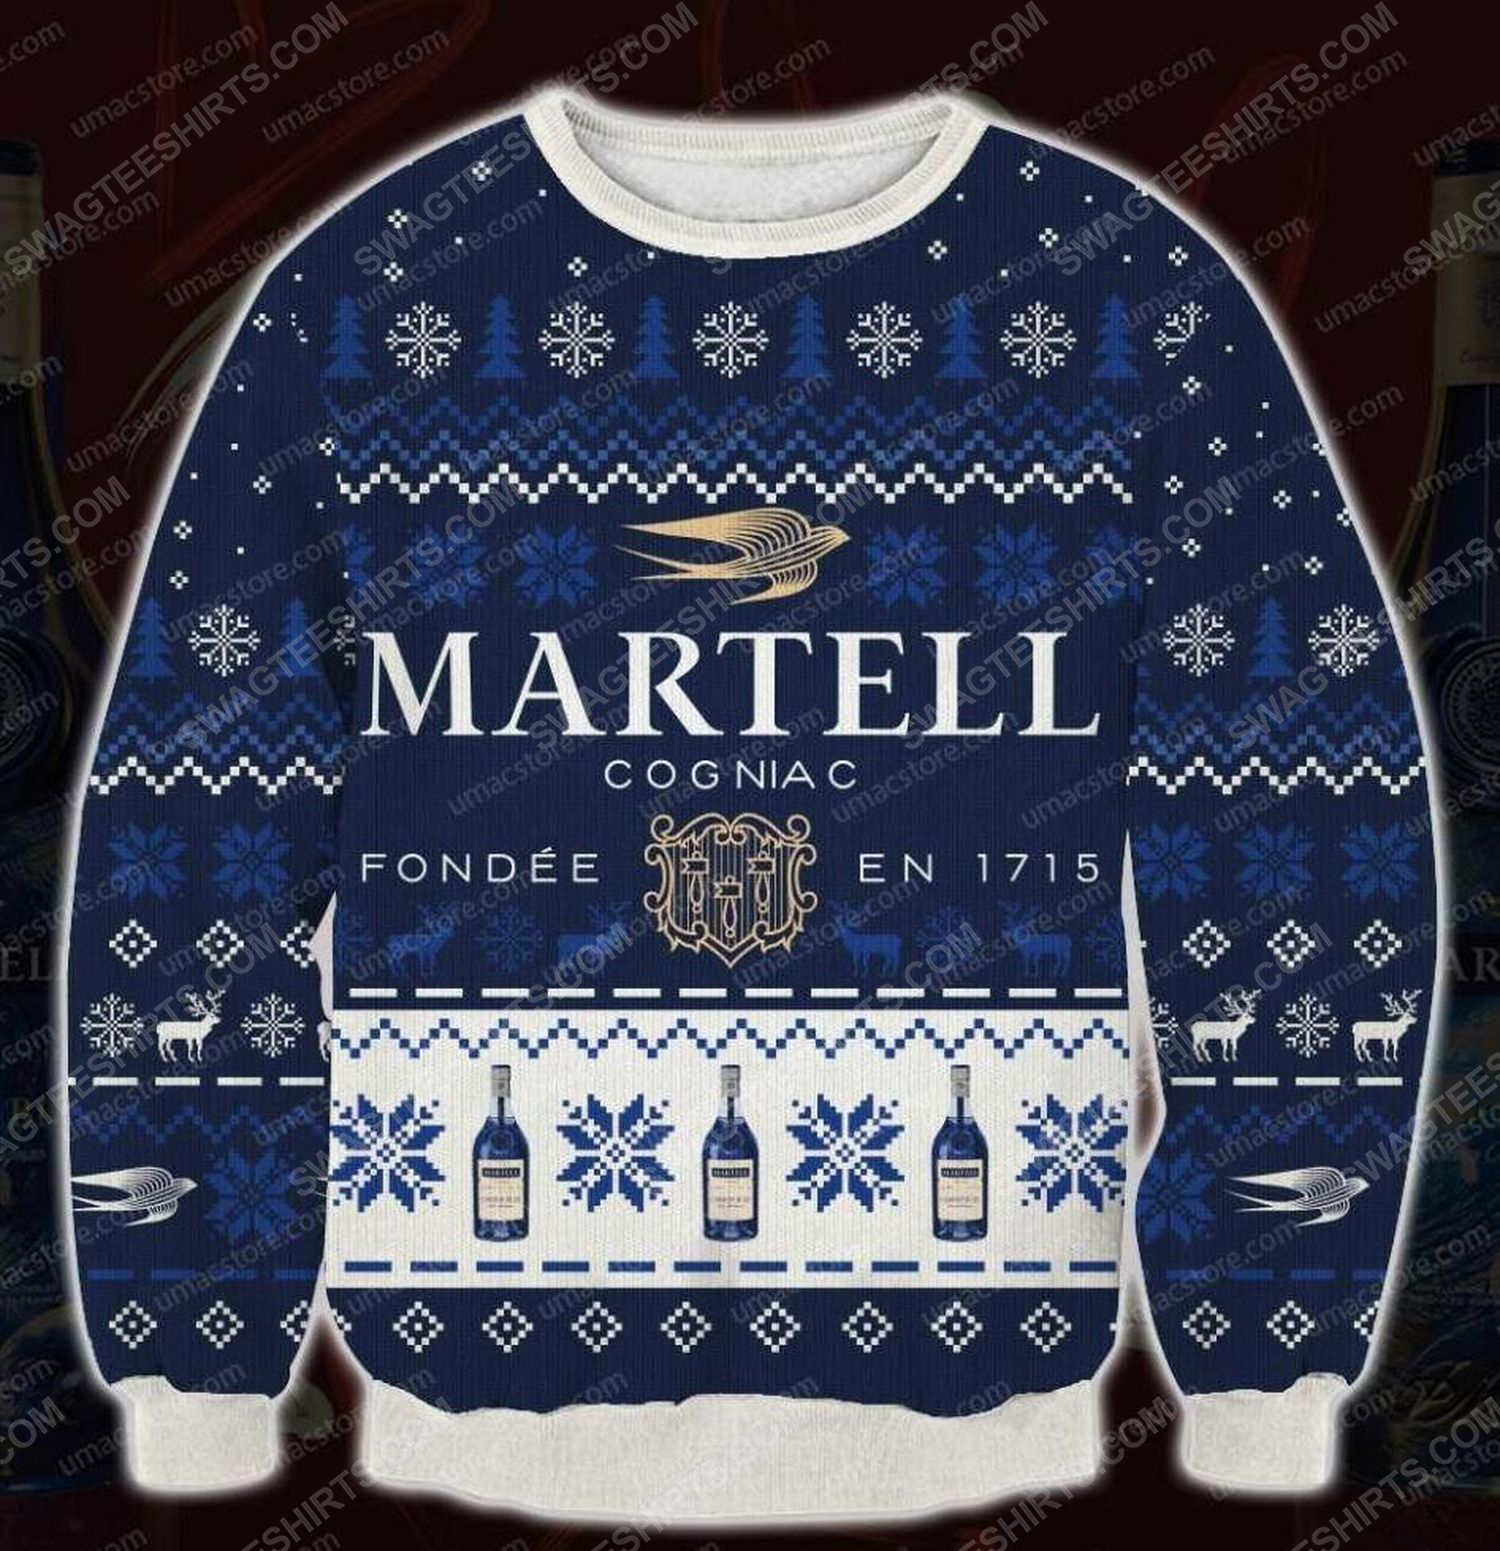 Martell cognac fondee en 1715 ugly christmas sweater